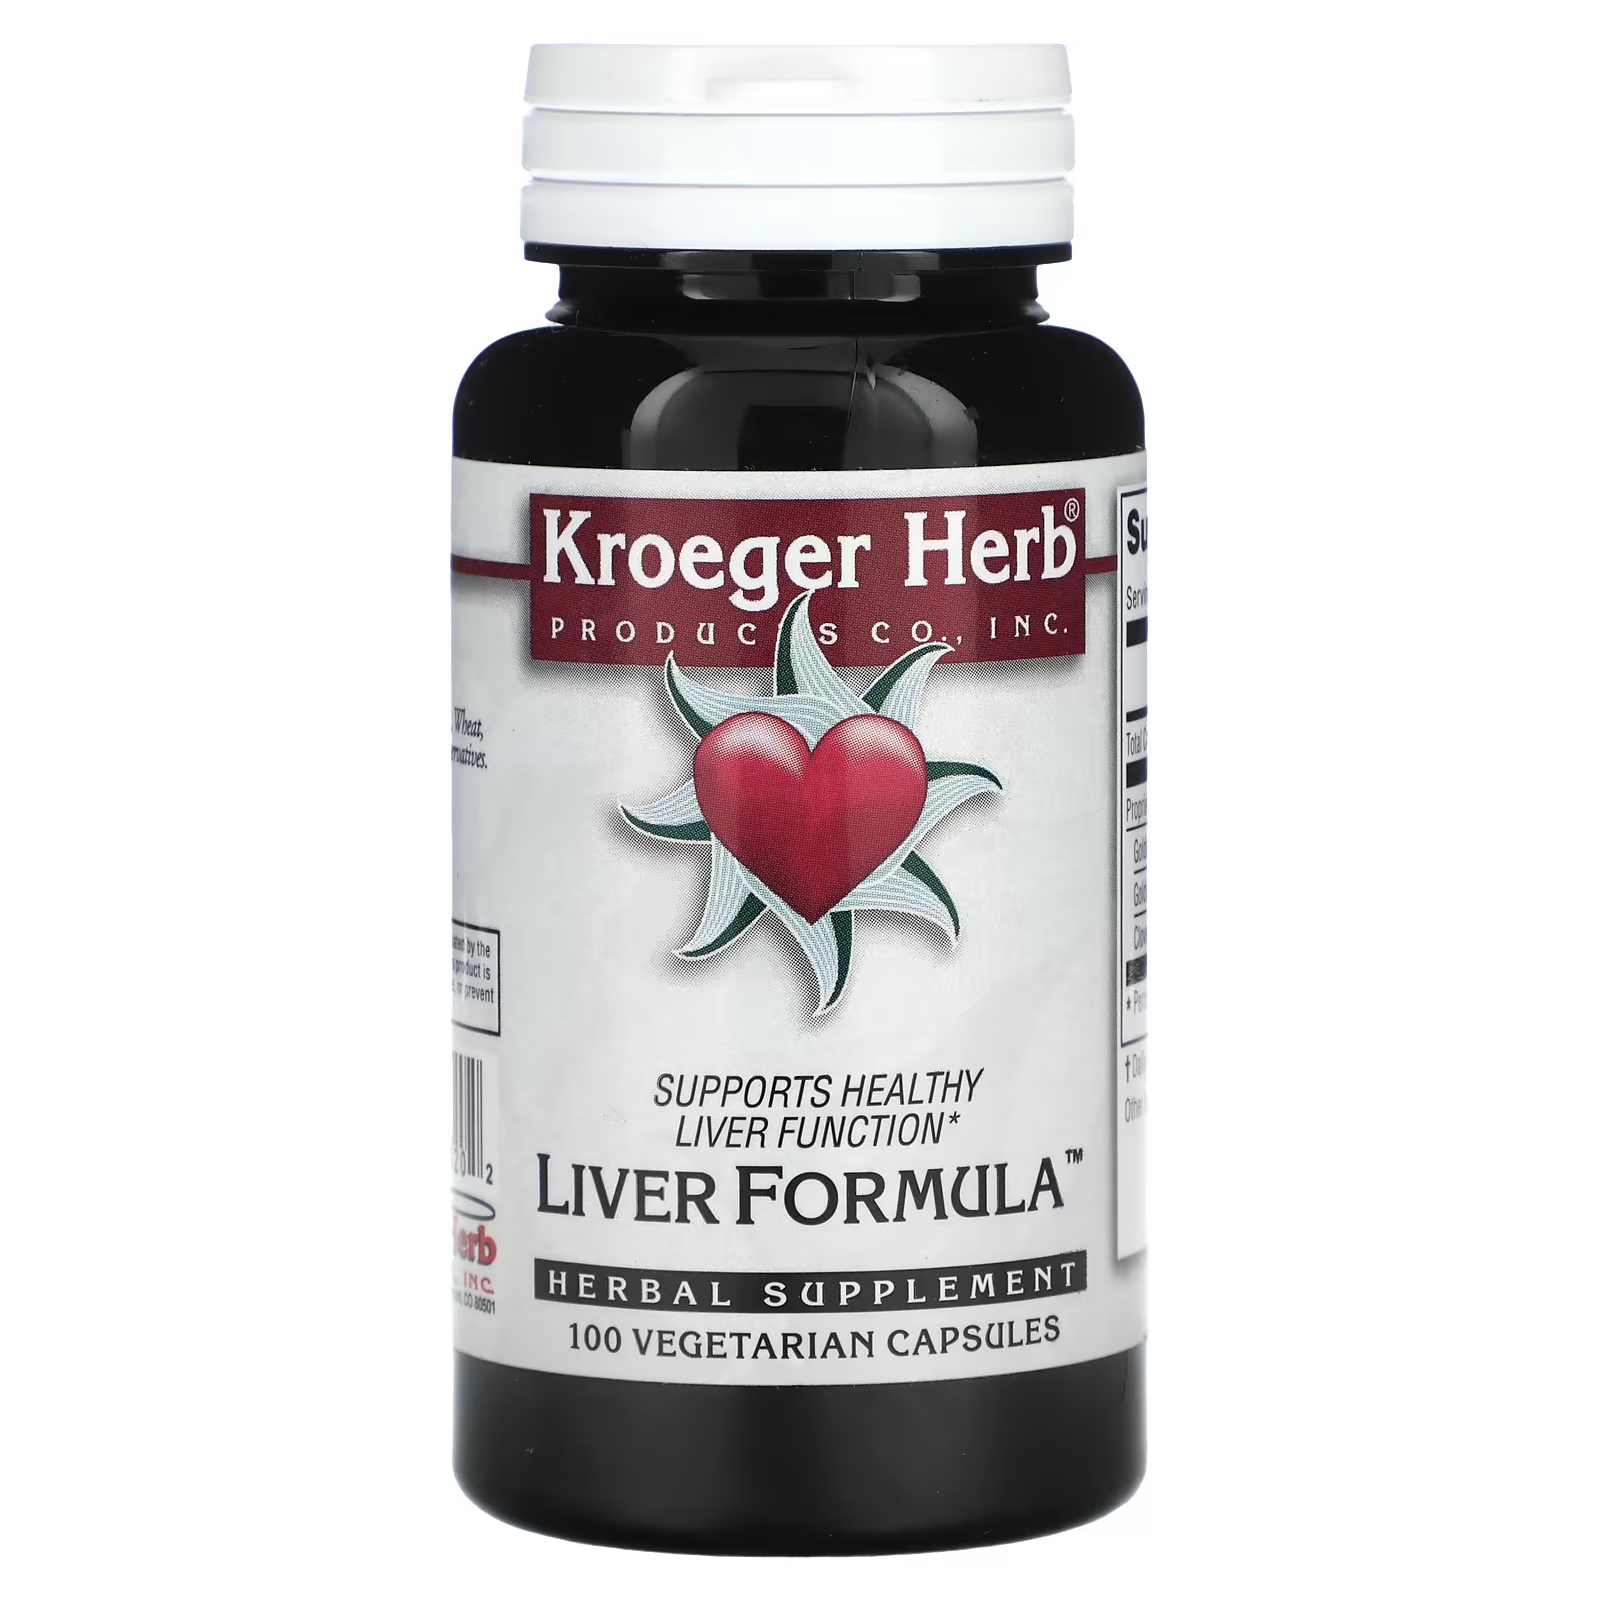 Растительная добавка Kroeger Herb Co Liver Formula, 100 капсул растительная добавка kroeger herb co балансировщик полярности 100 капсул